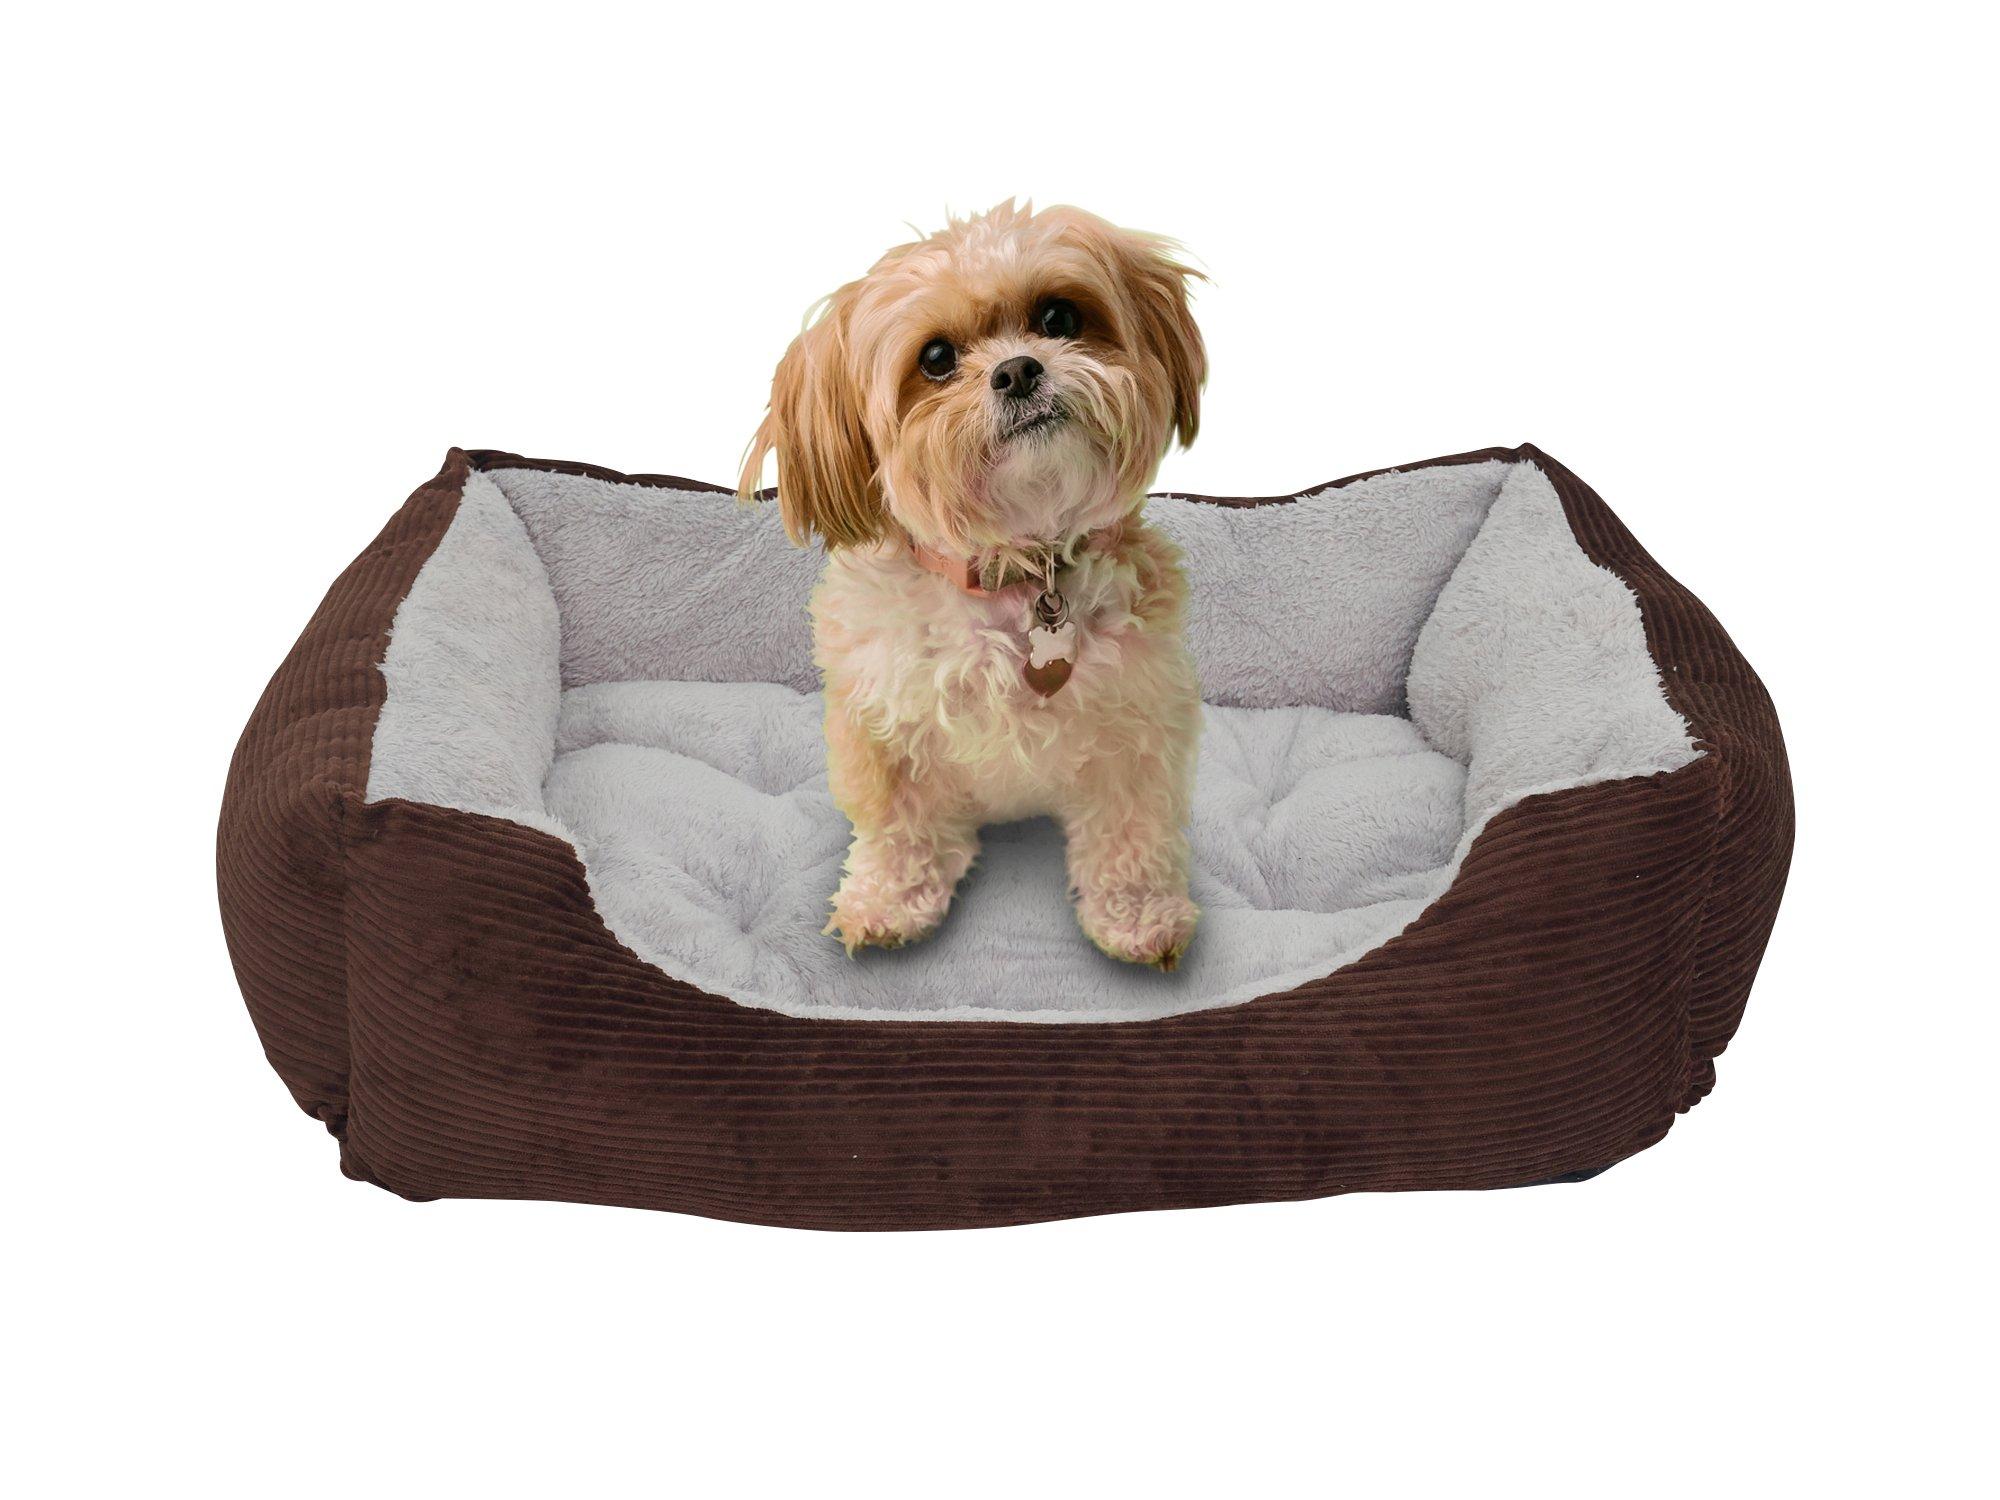 Brown Corduroy Dog Pet Bed with Fleece Cushion